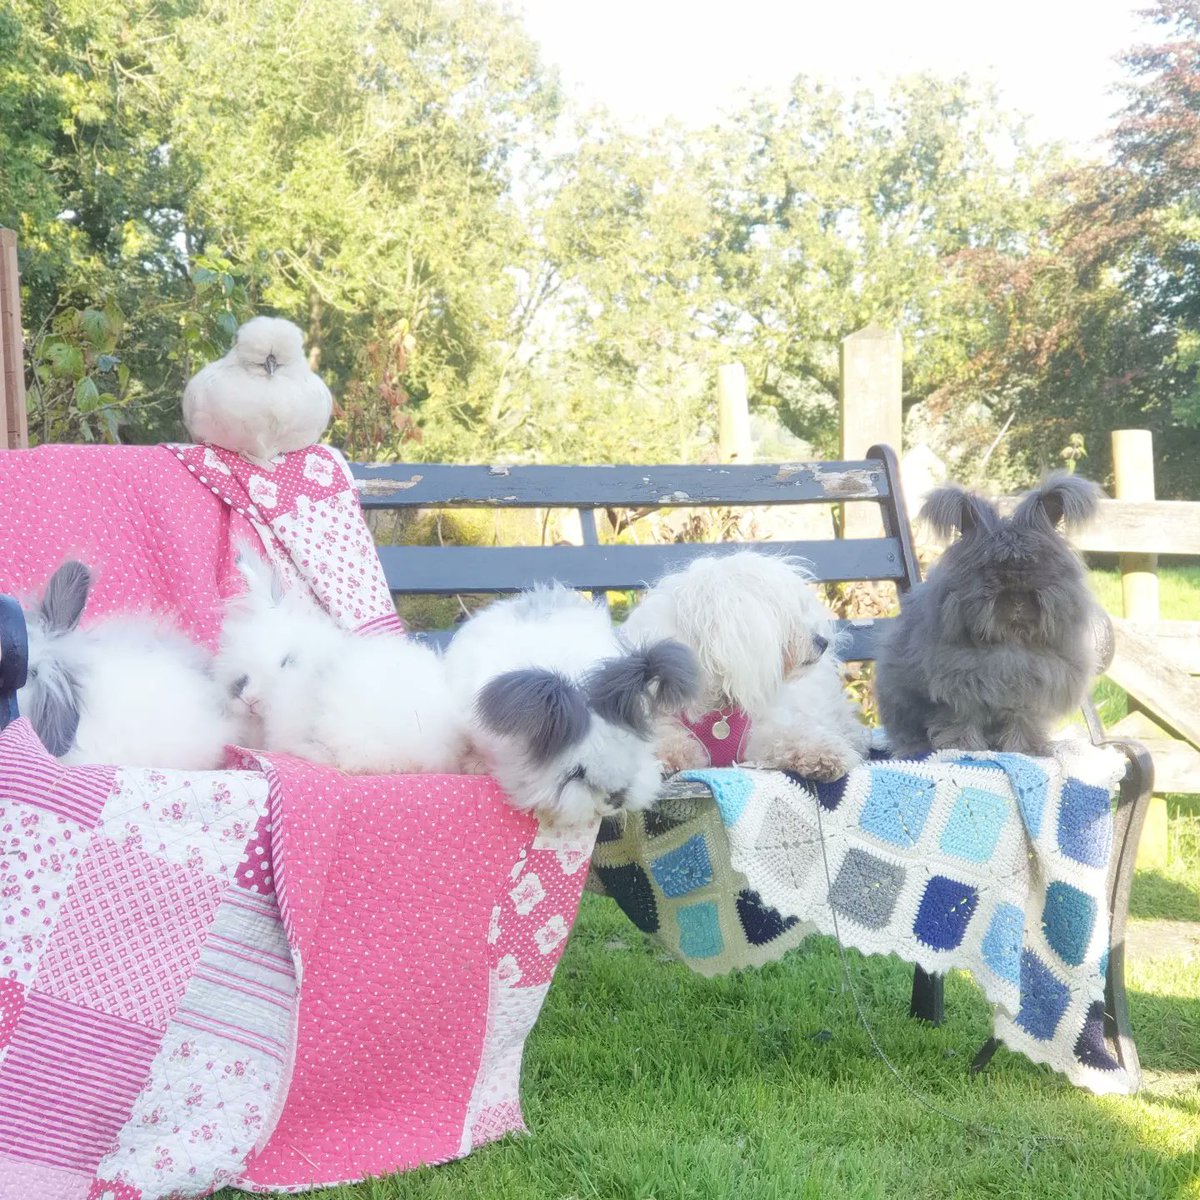 Meet some of the family... #autumn #angora #bunny #rabbit #family #countryside